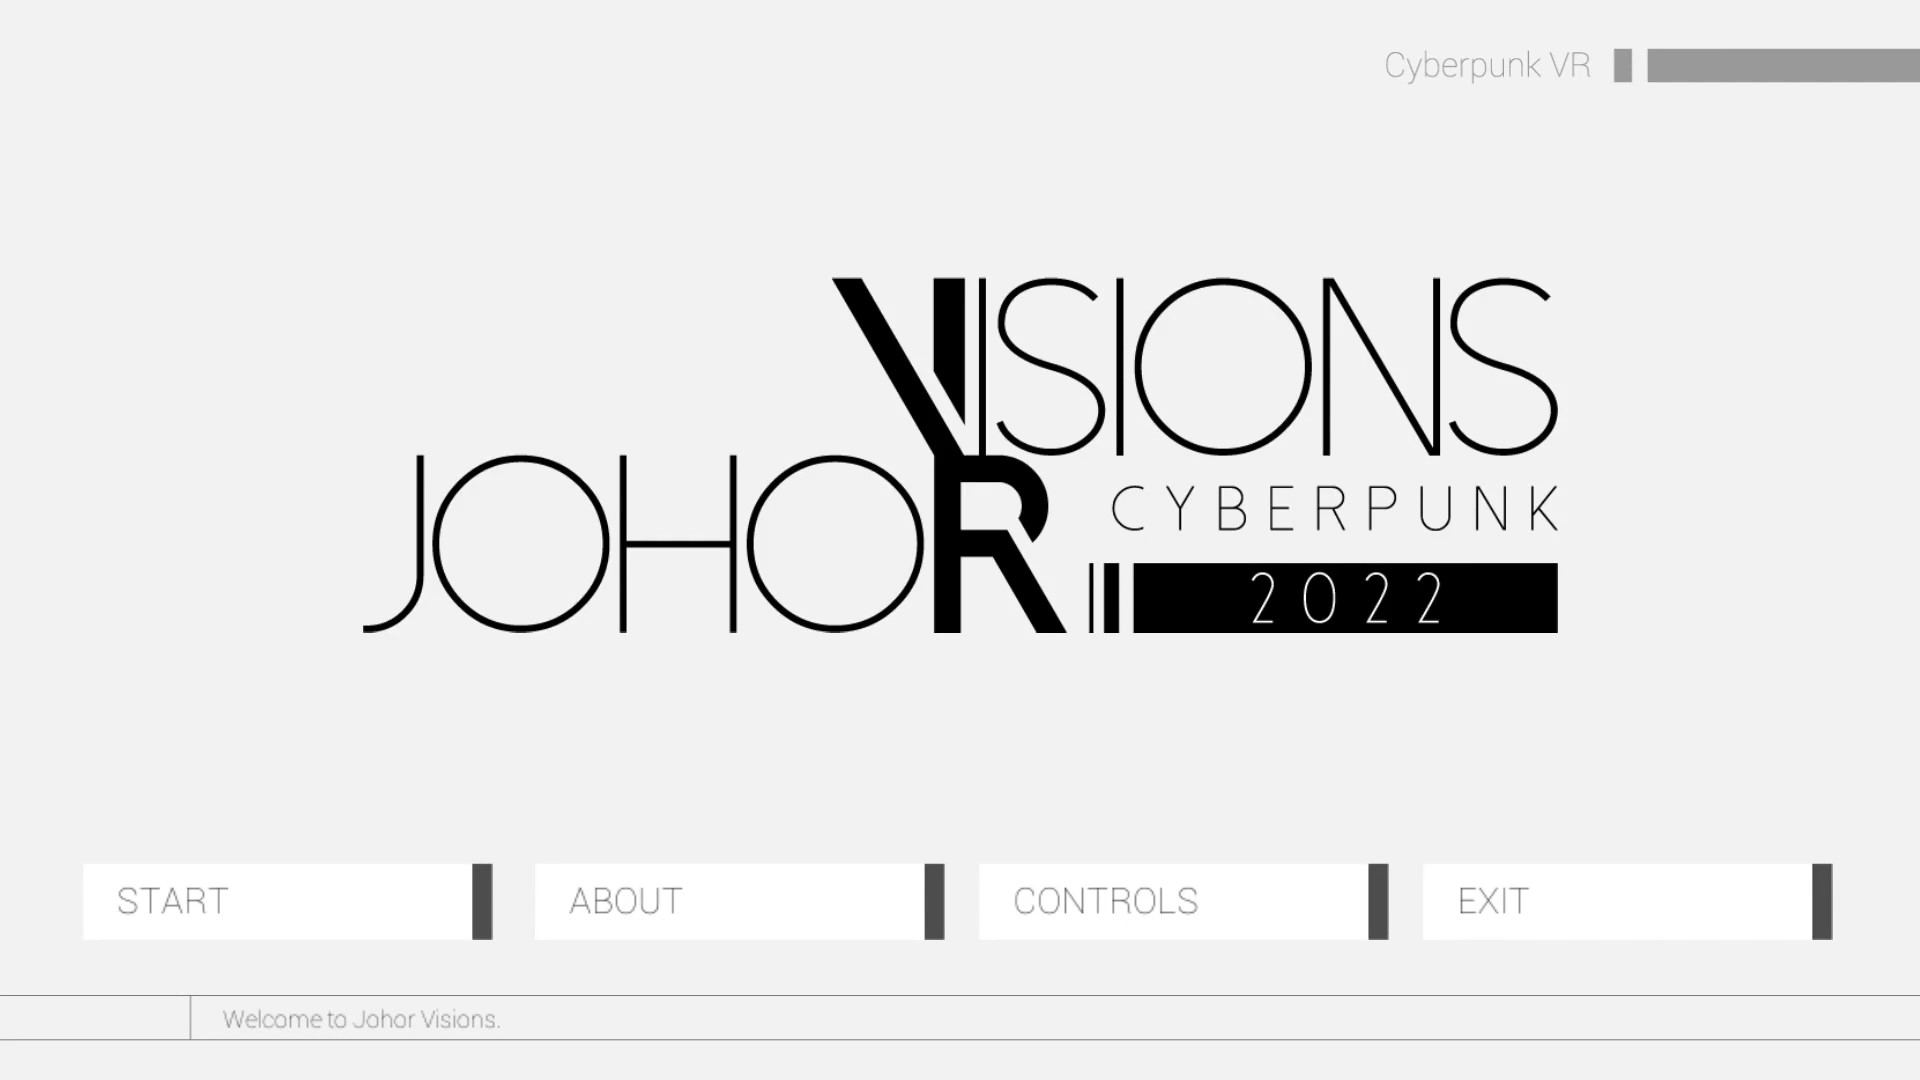 Johor Visions 2022 - Cyberpunk VR